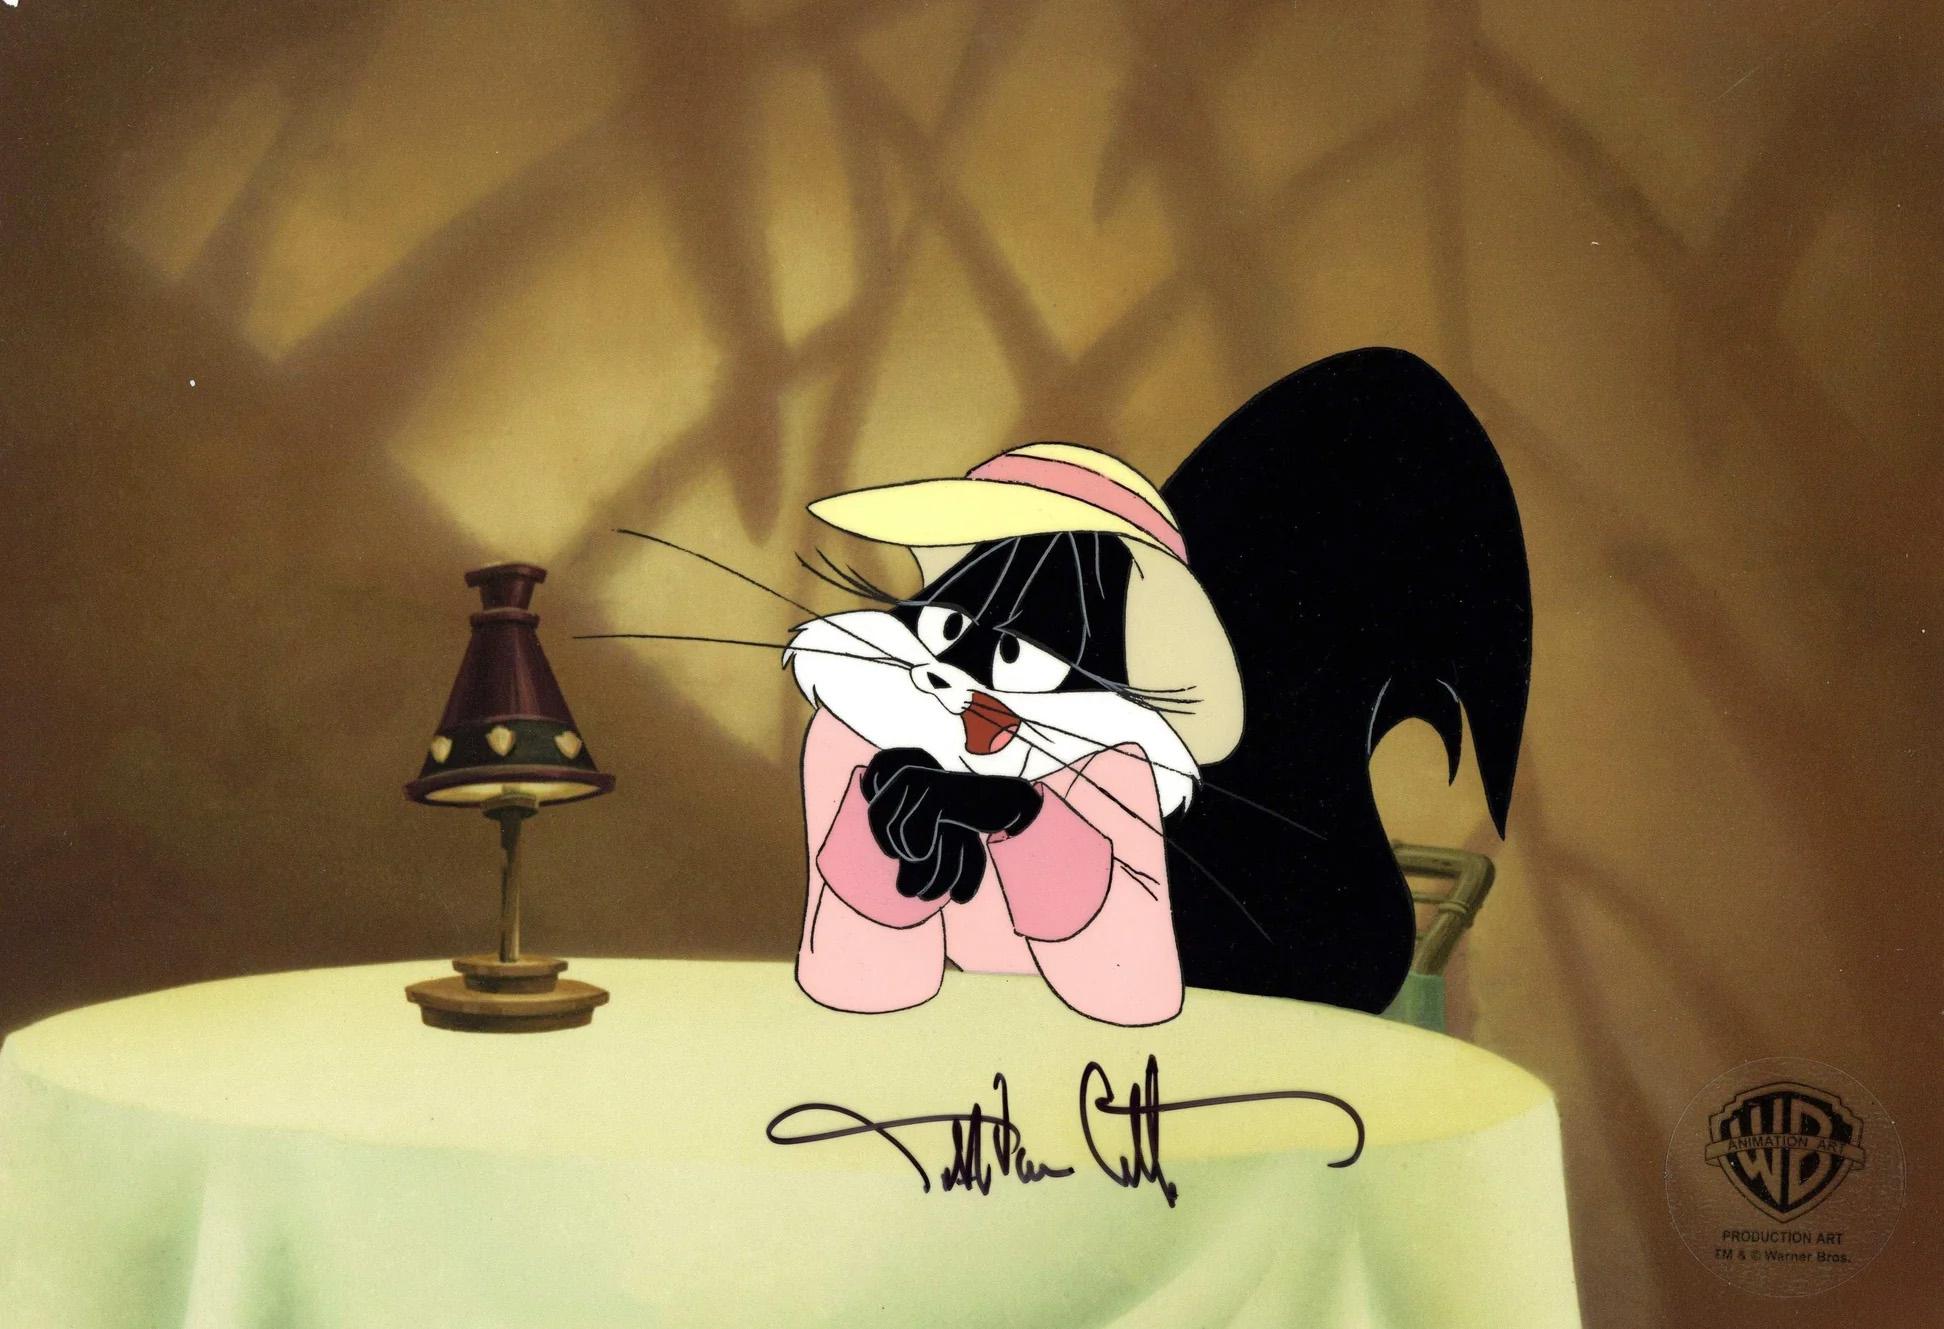 Looney Tunes Original Production Cel Signed By Darrell Van Citters: Penelope - Art by Warner Bros. Studio Artists